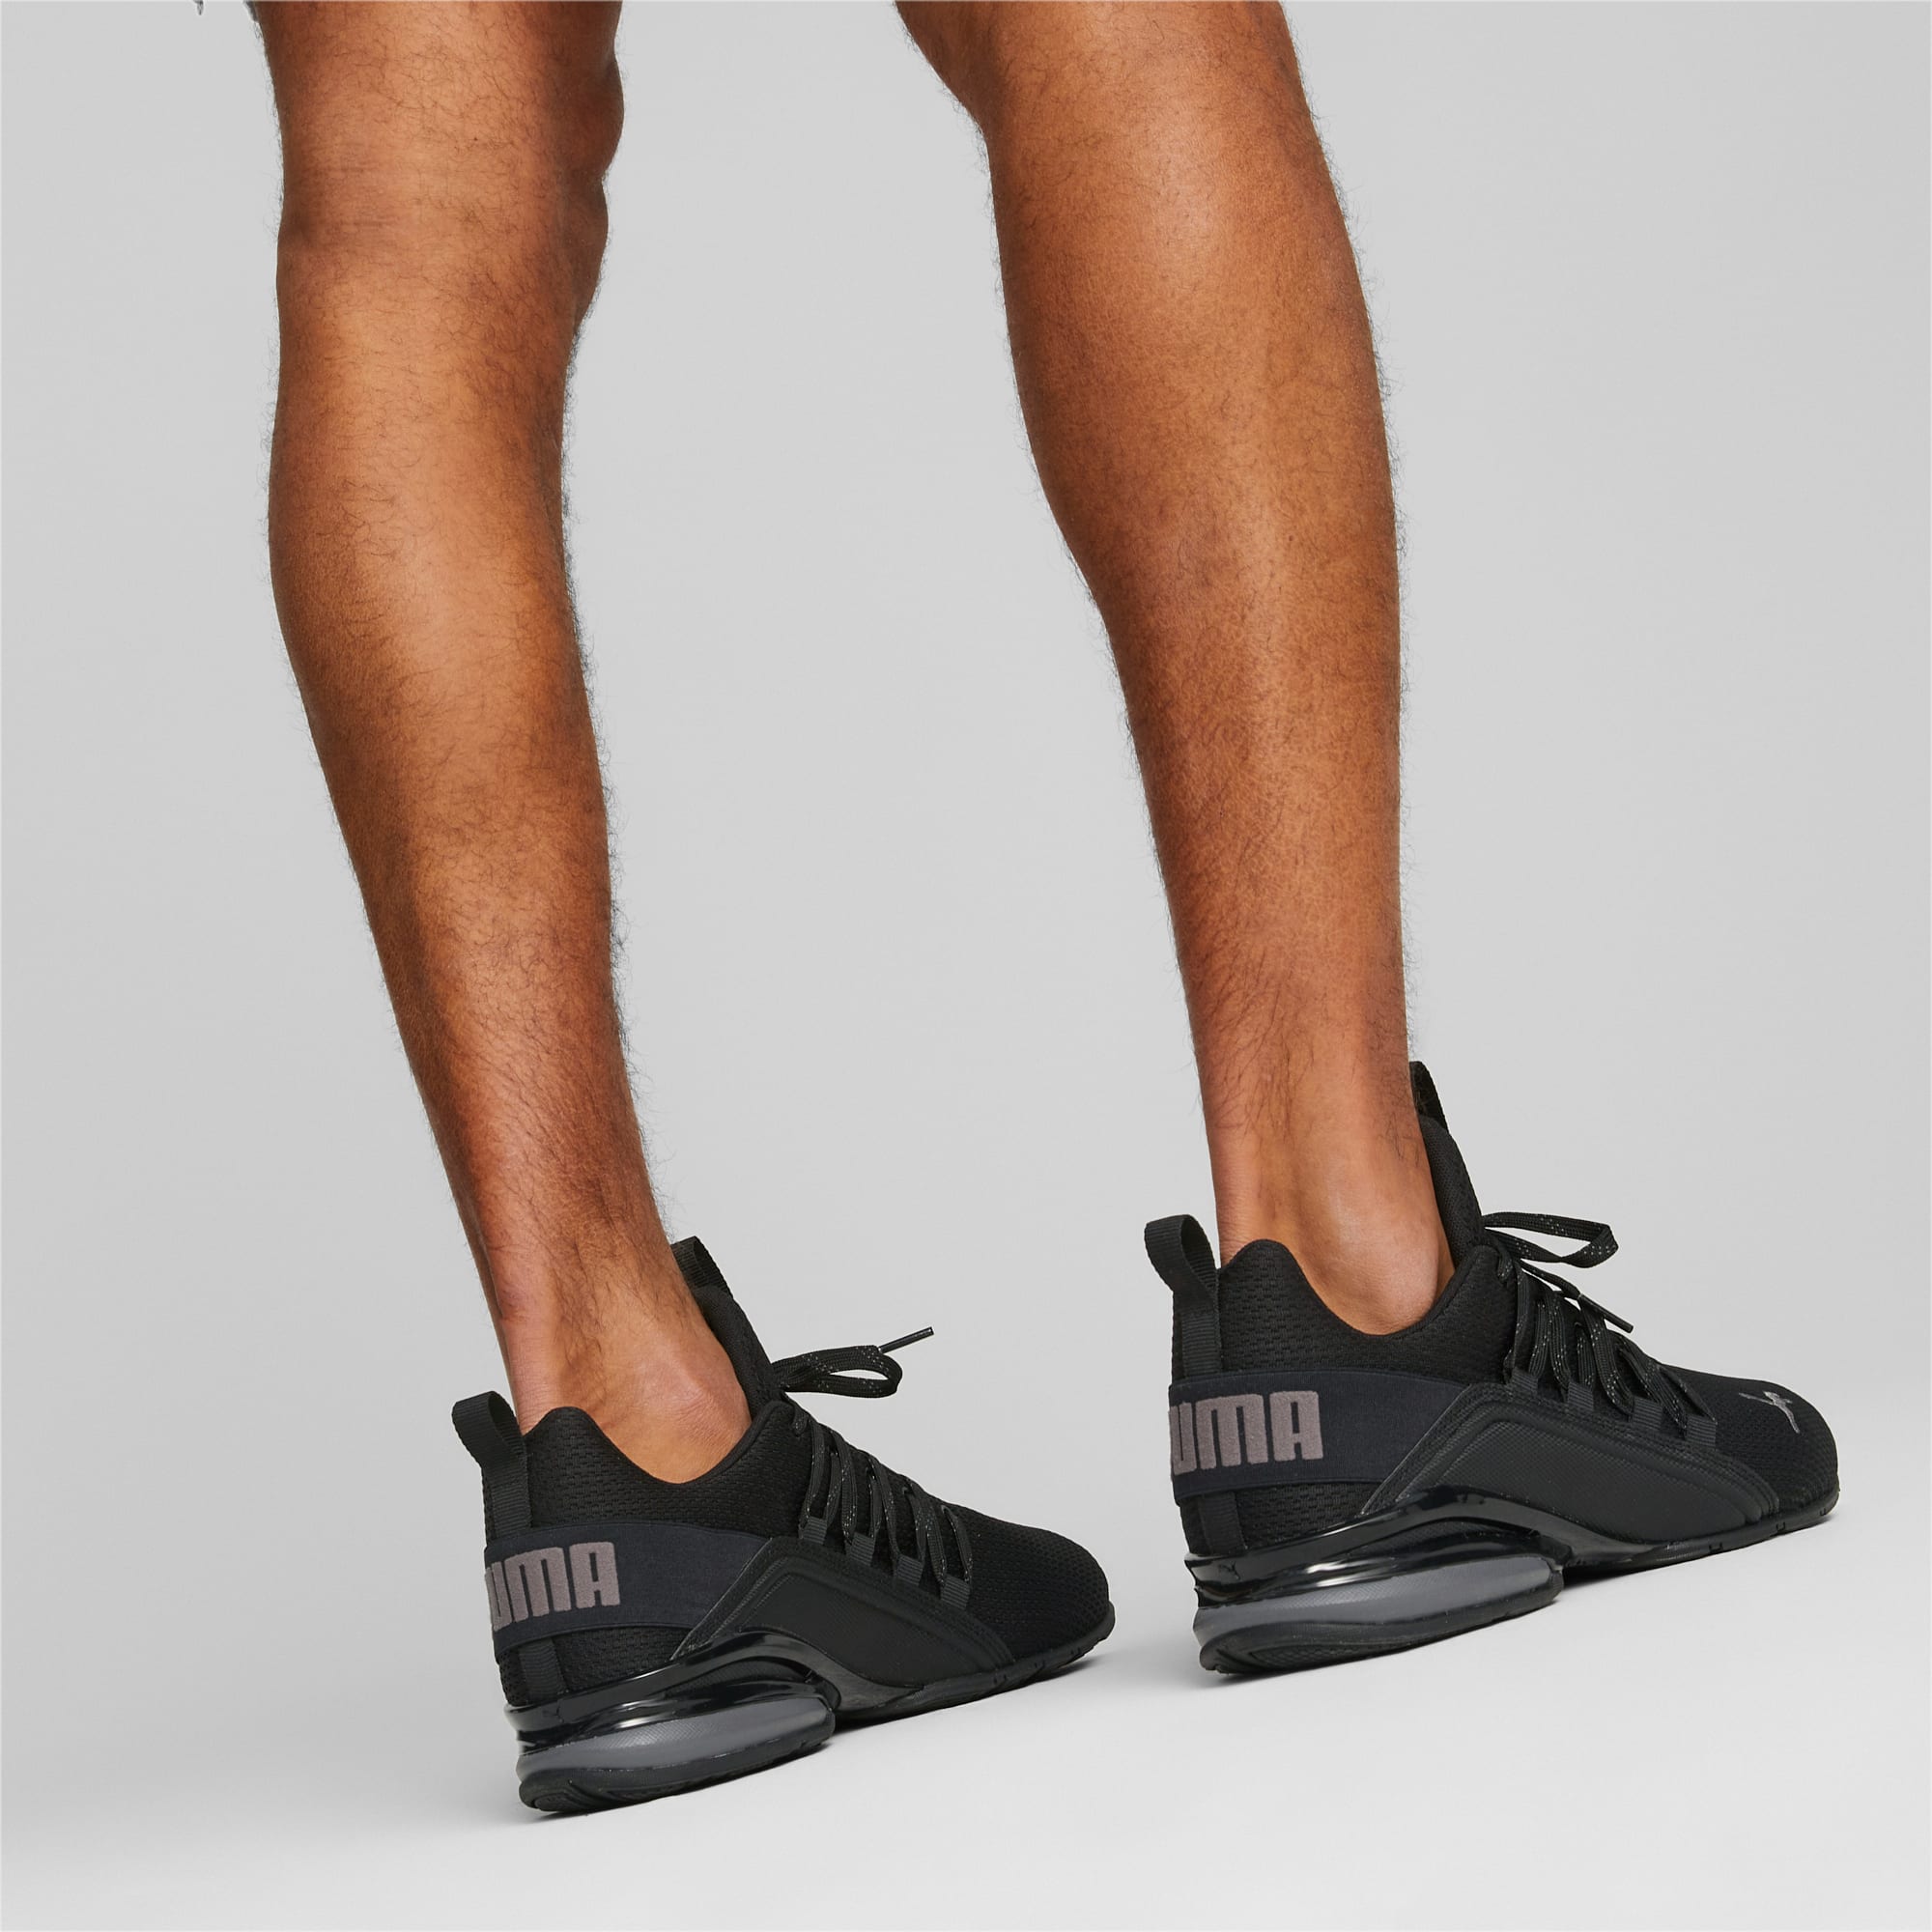 PUMA Axelion Refresh Running Shoes Men, Black/Cool Dark Grey, Size 39, Shoes